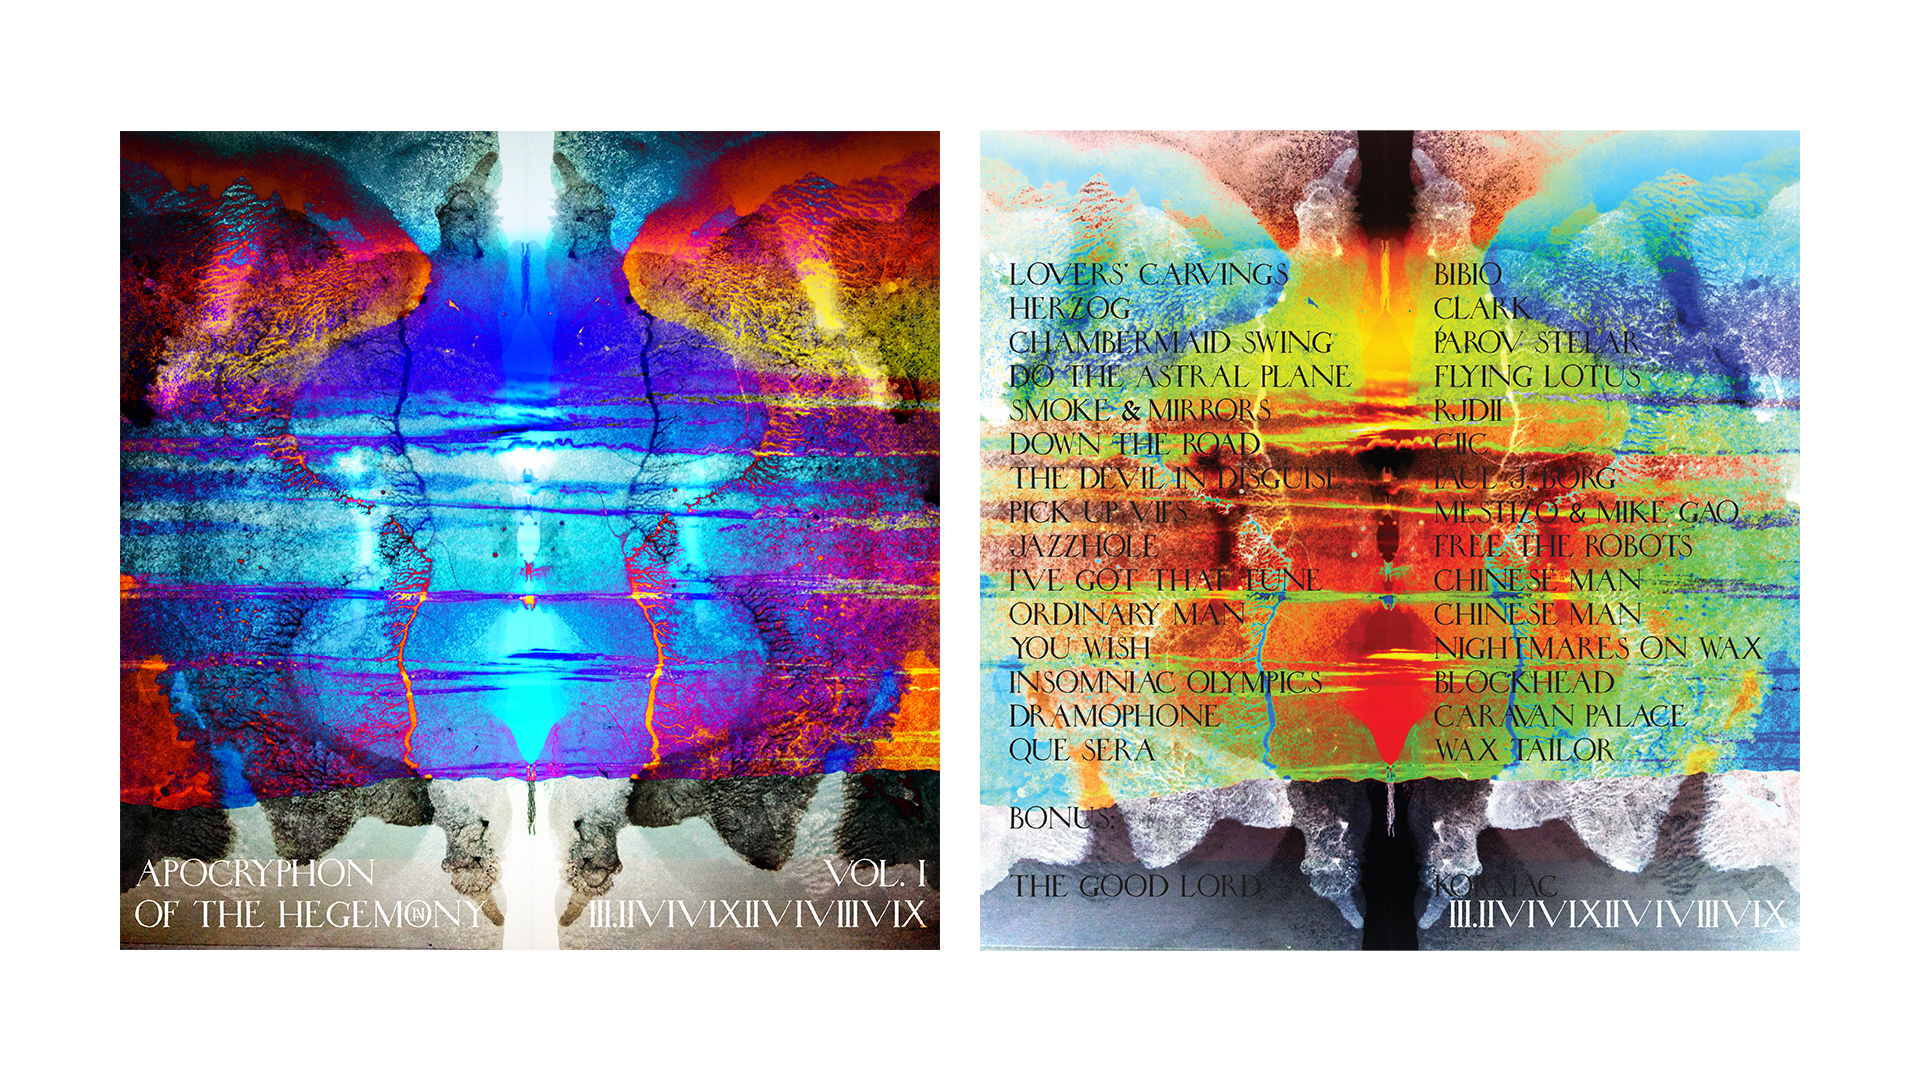 rorschach album artwork with color burn